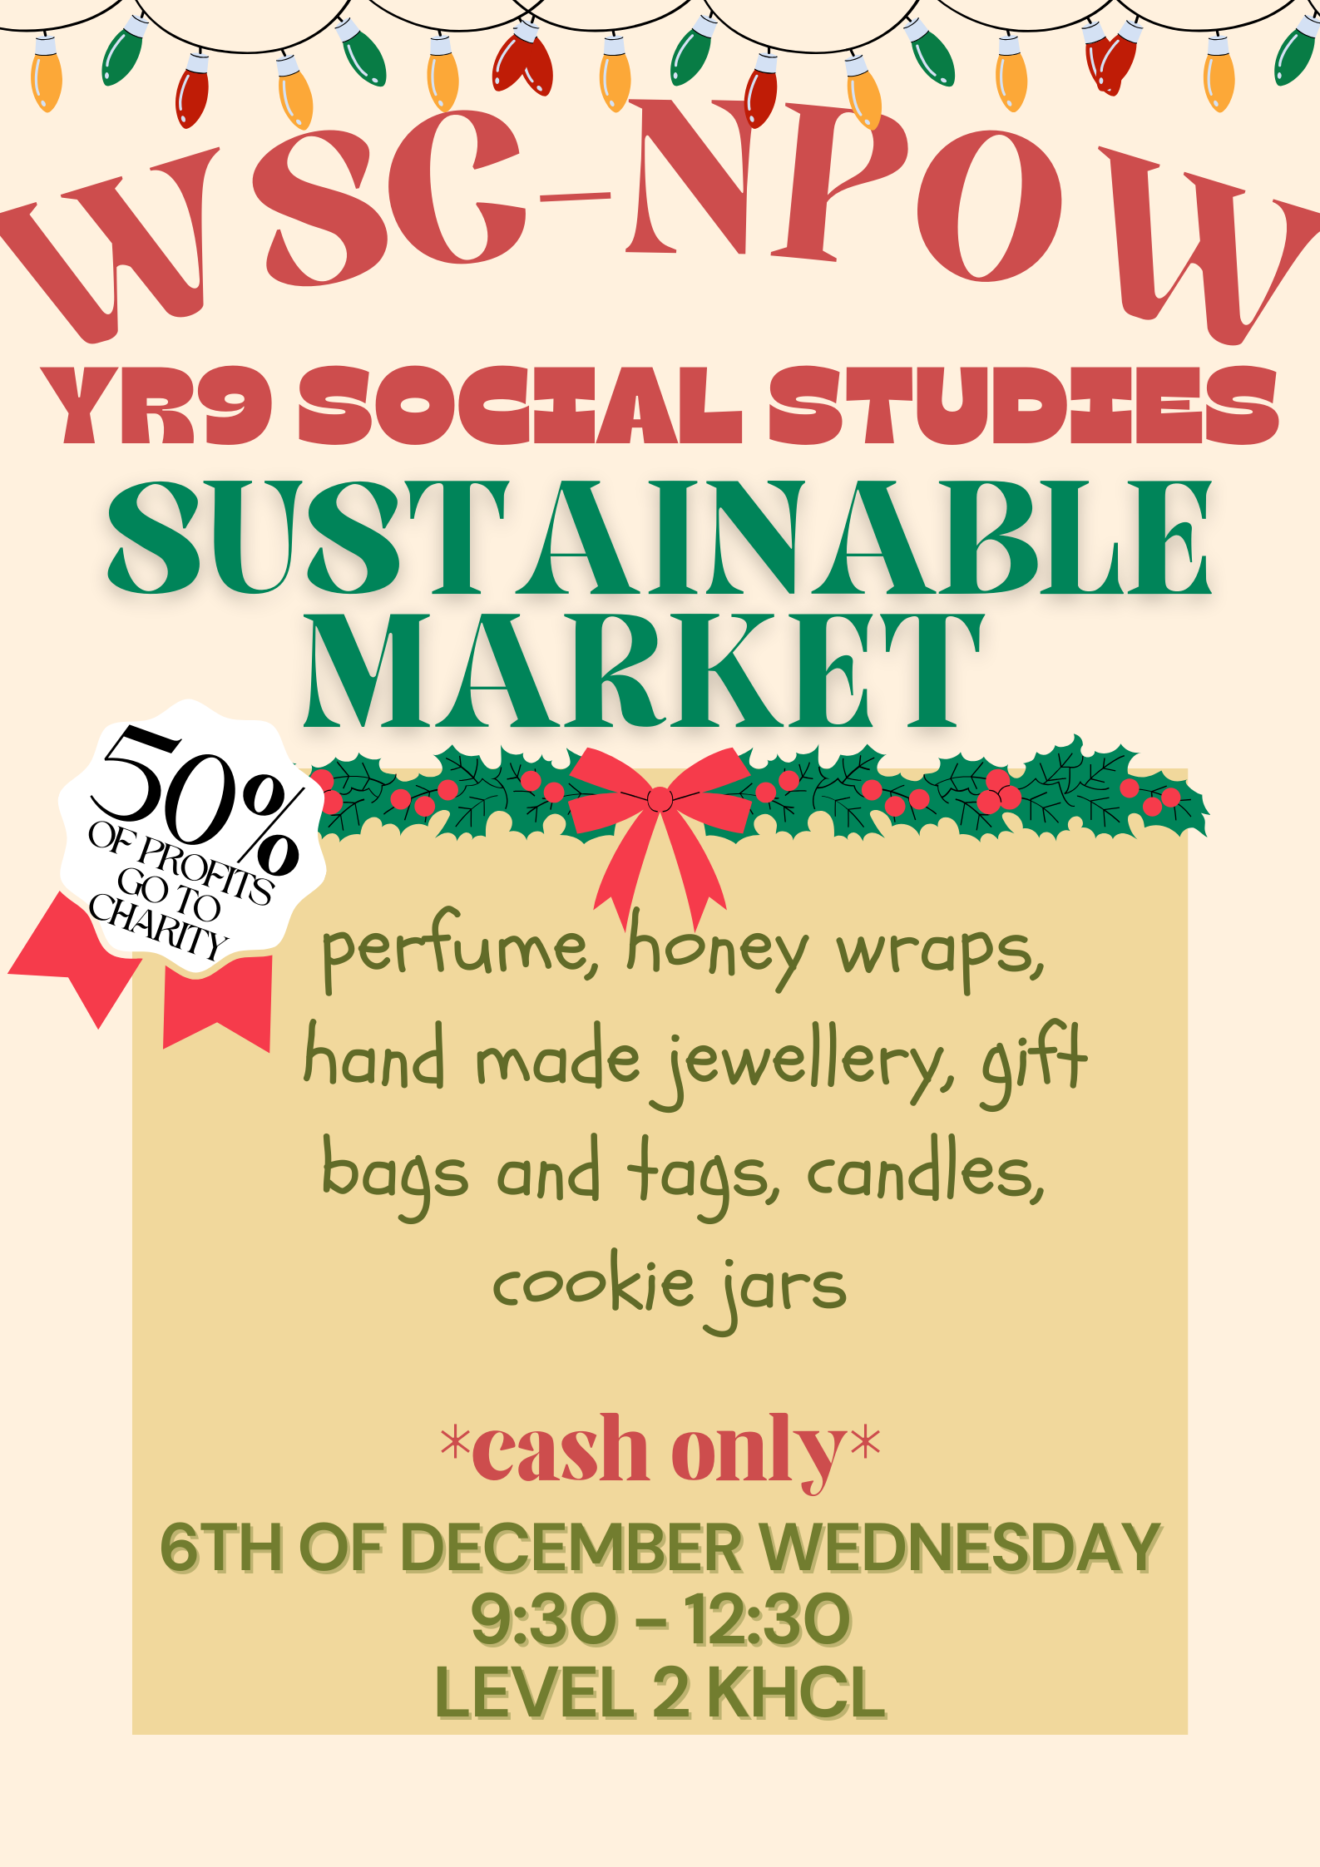 Tikanga ā-Iwi/Social Studies Sustainable Christmas Market